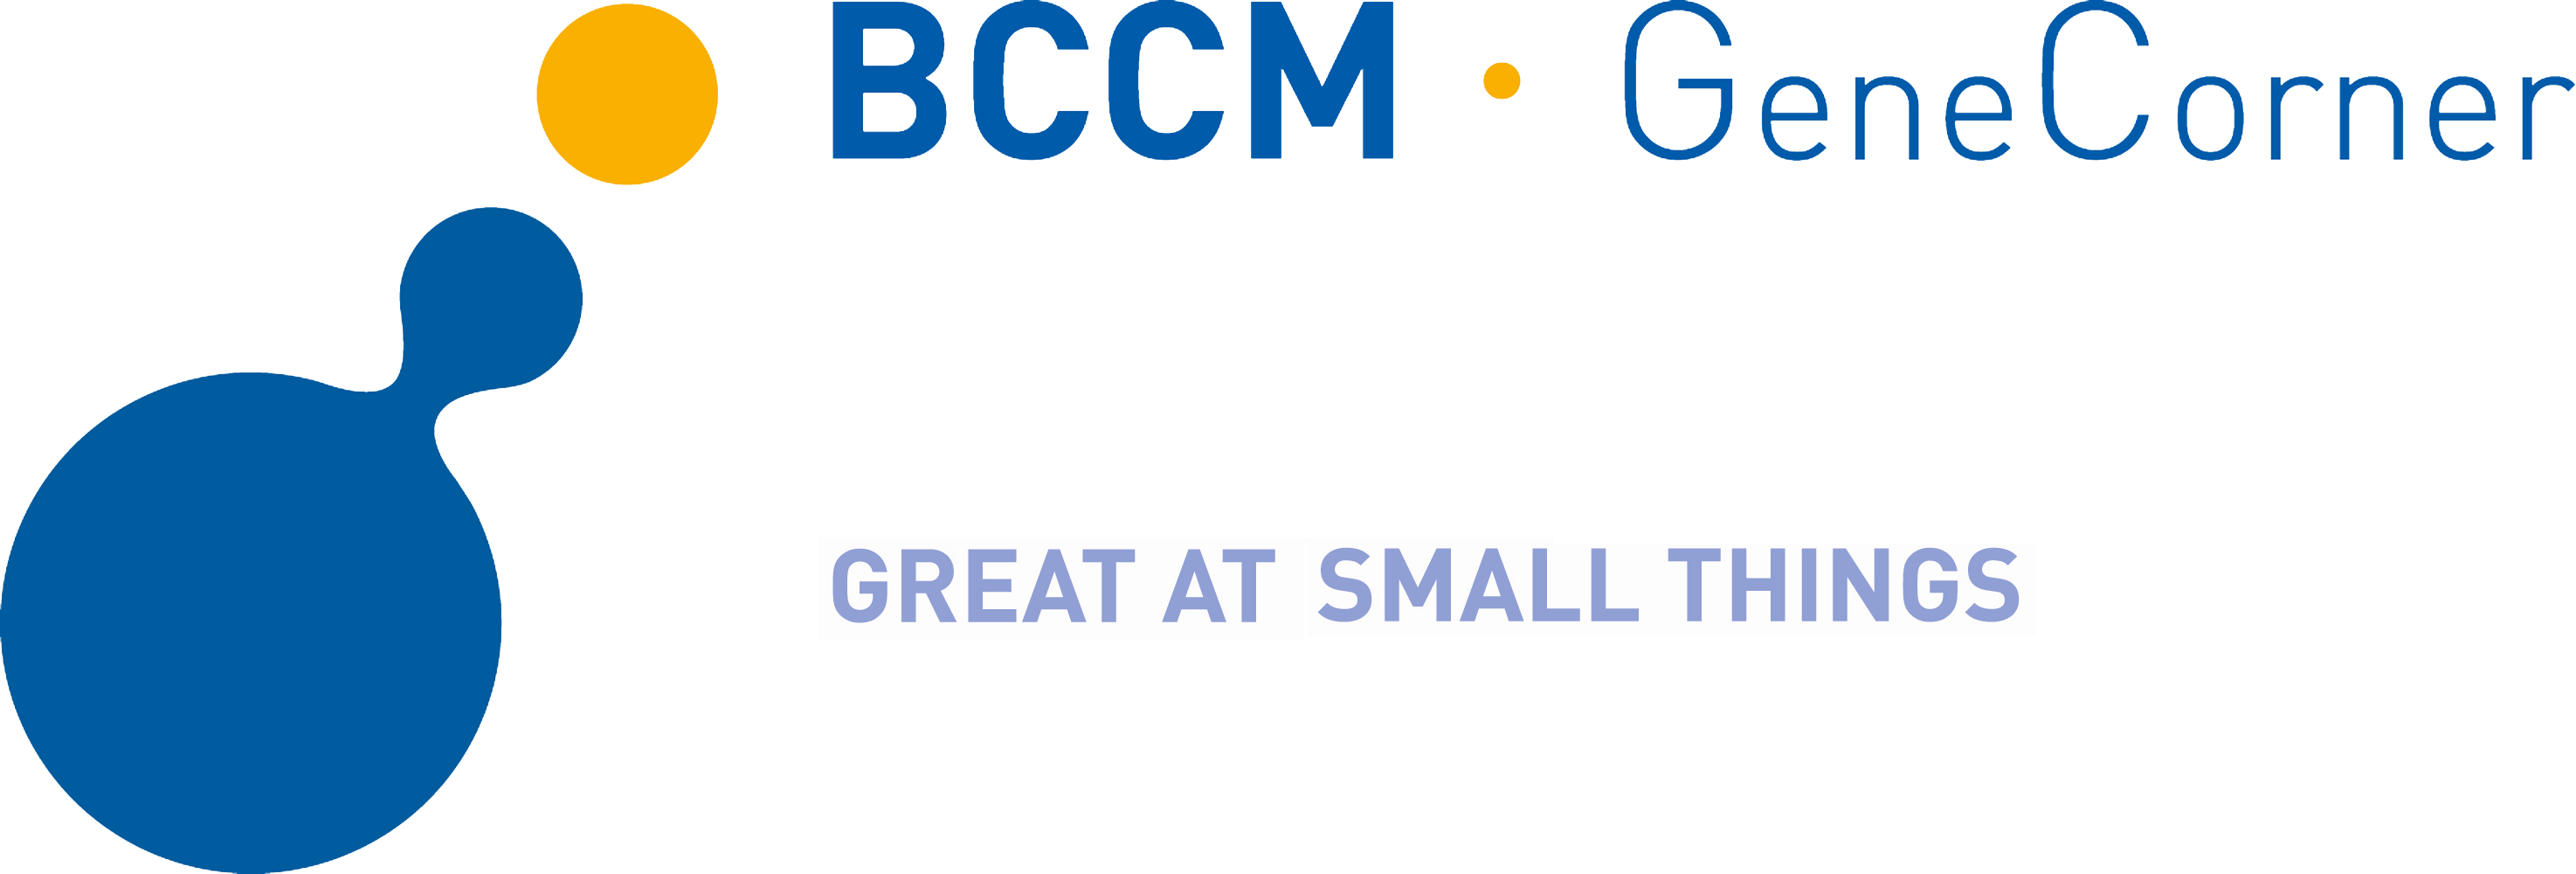 BCCM/GeneCorner